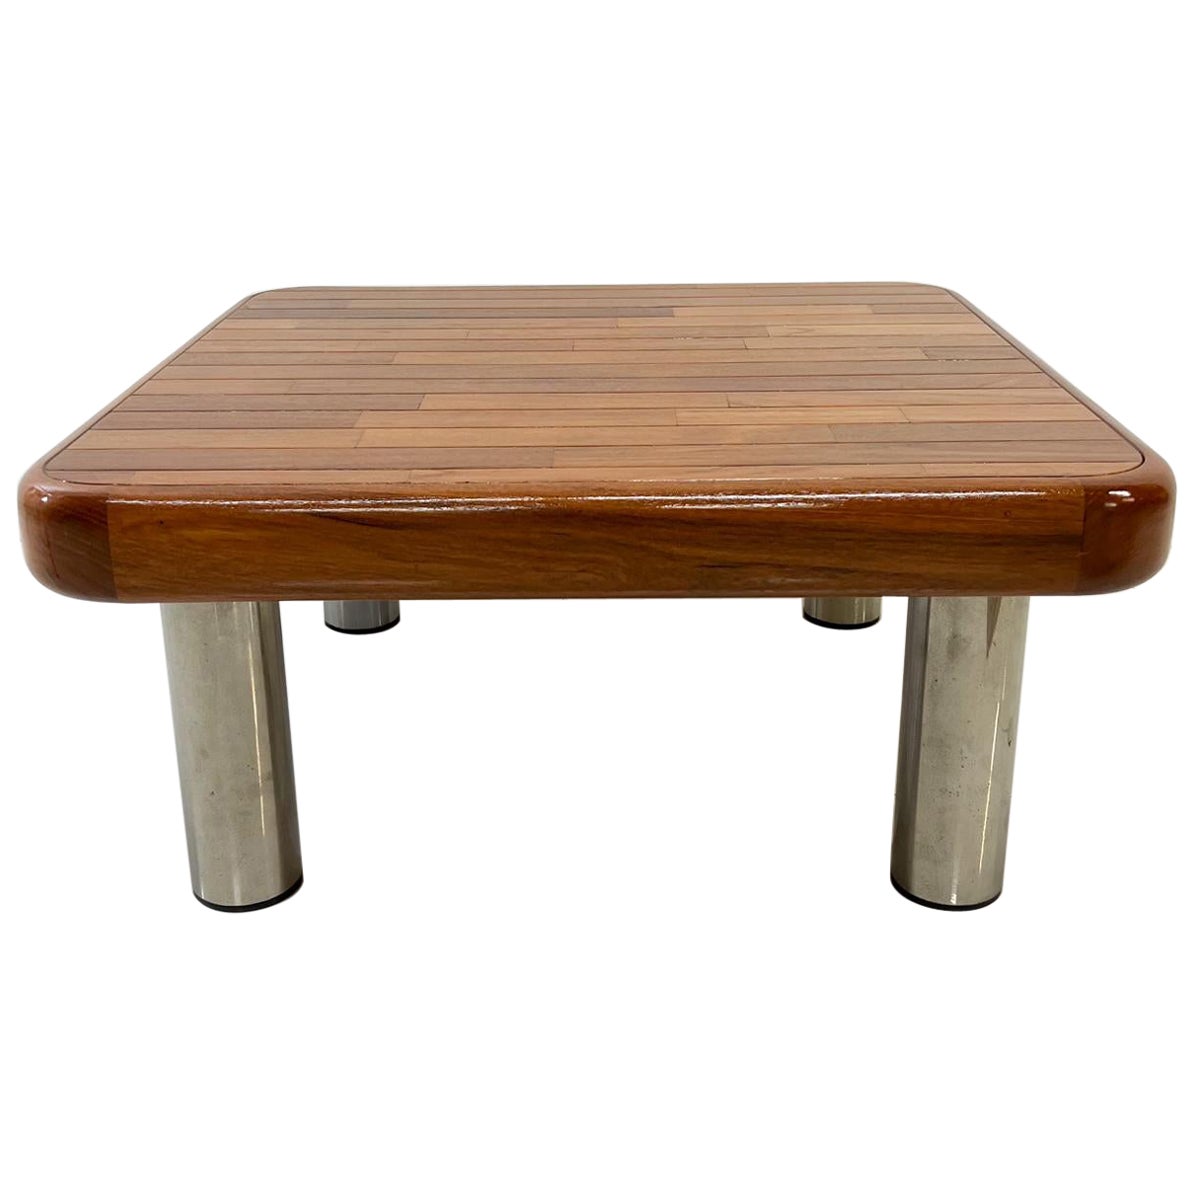 1970s Modern Coffee Table Staved Wood Tubular Chrome Legs 